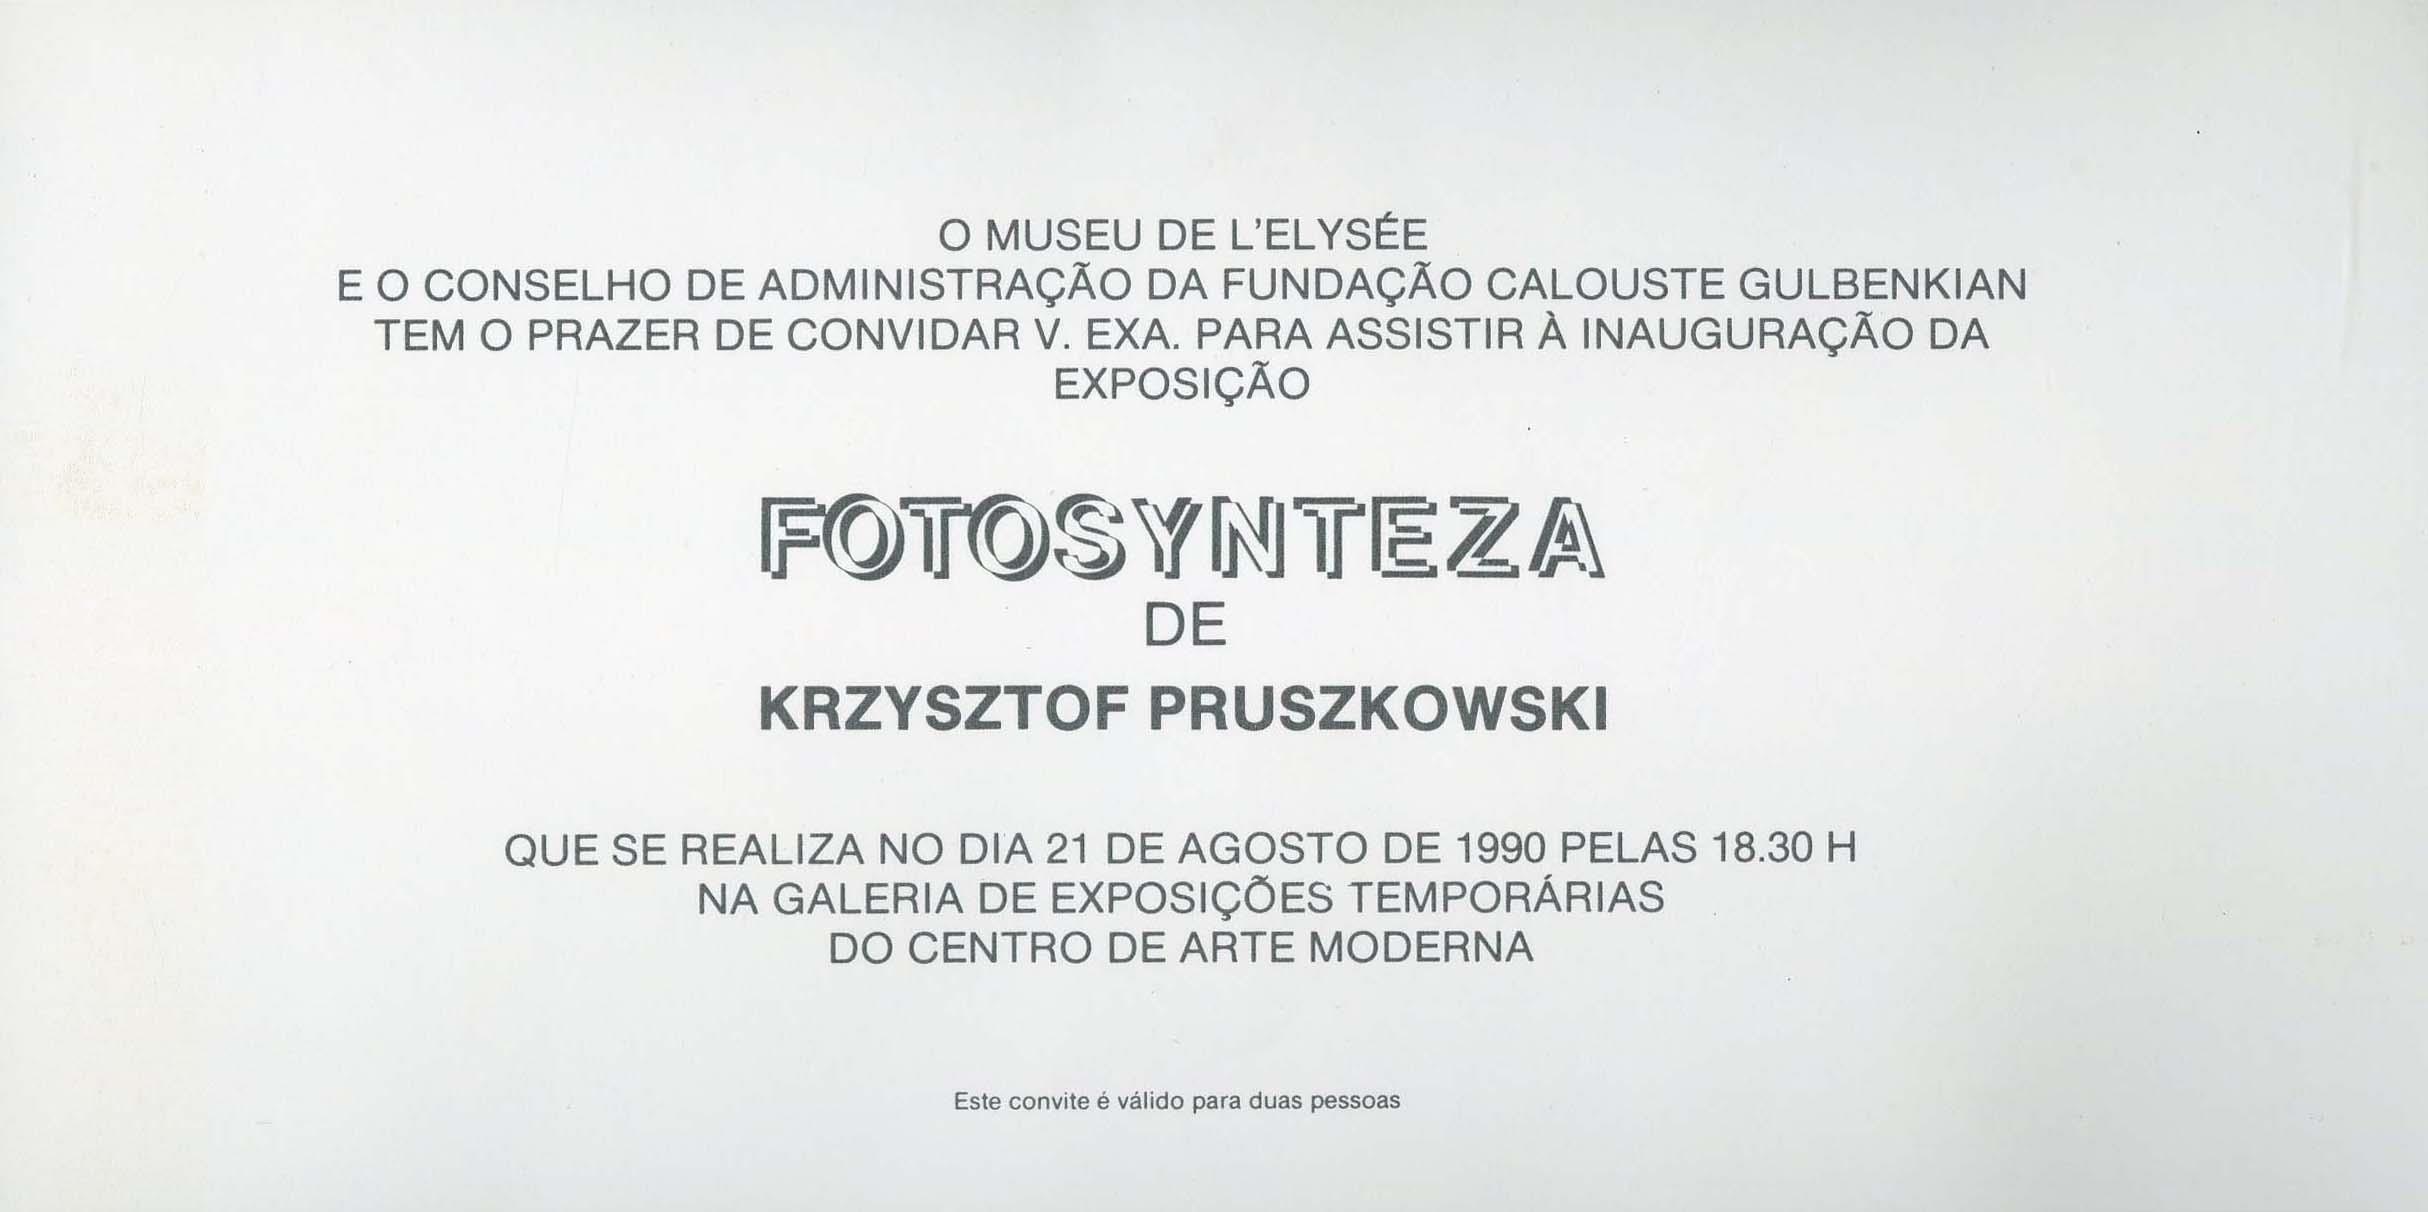 Krzysztof Pruszkowski. Fotosynteza, 1975 – 1988